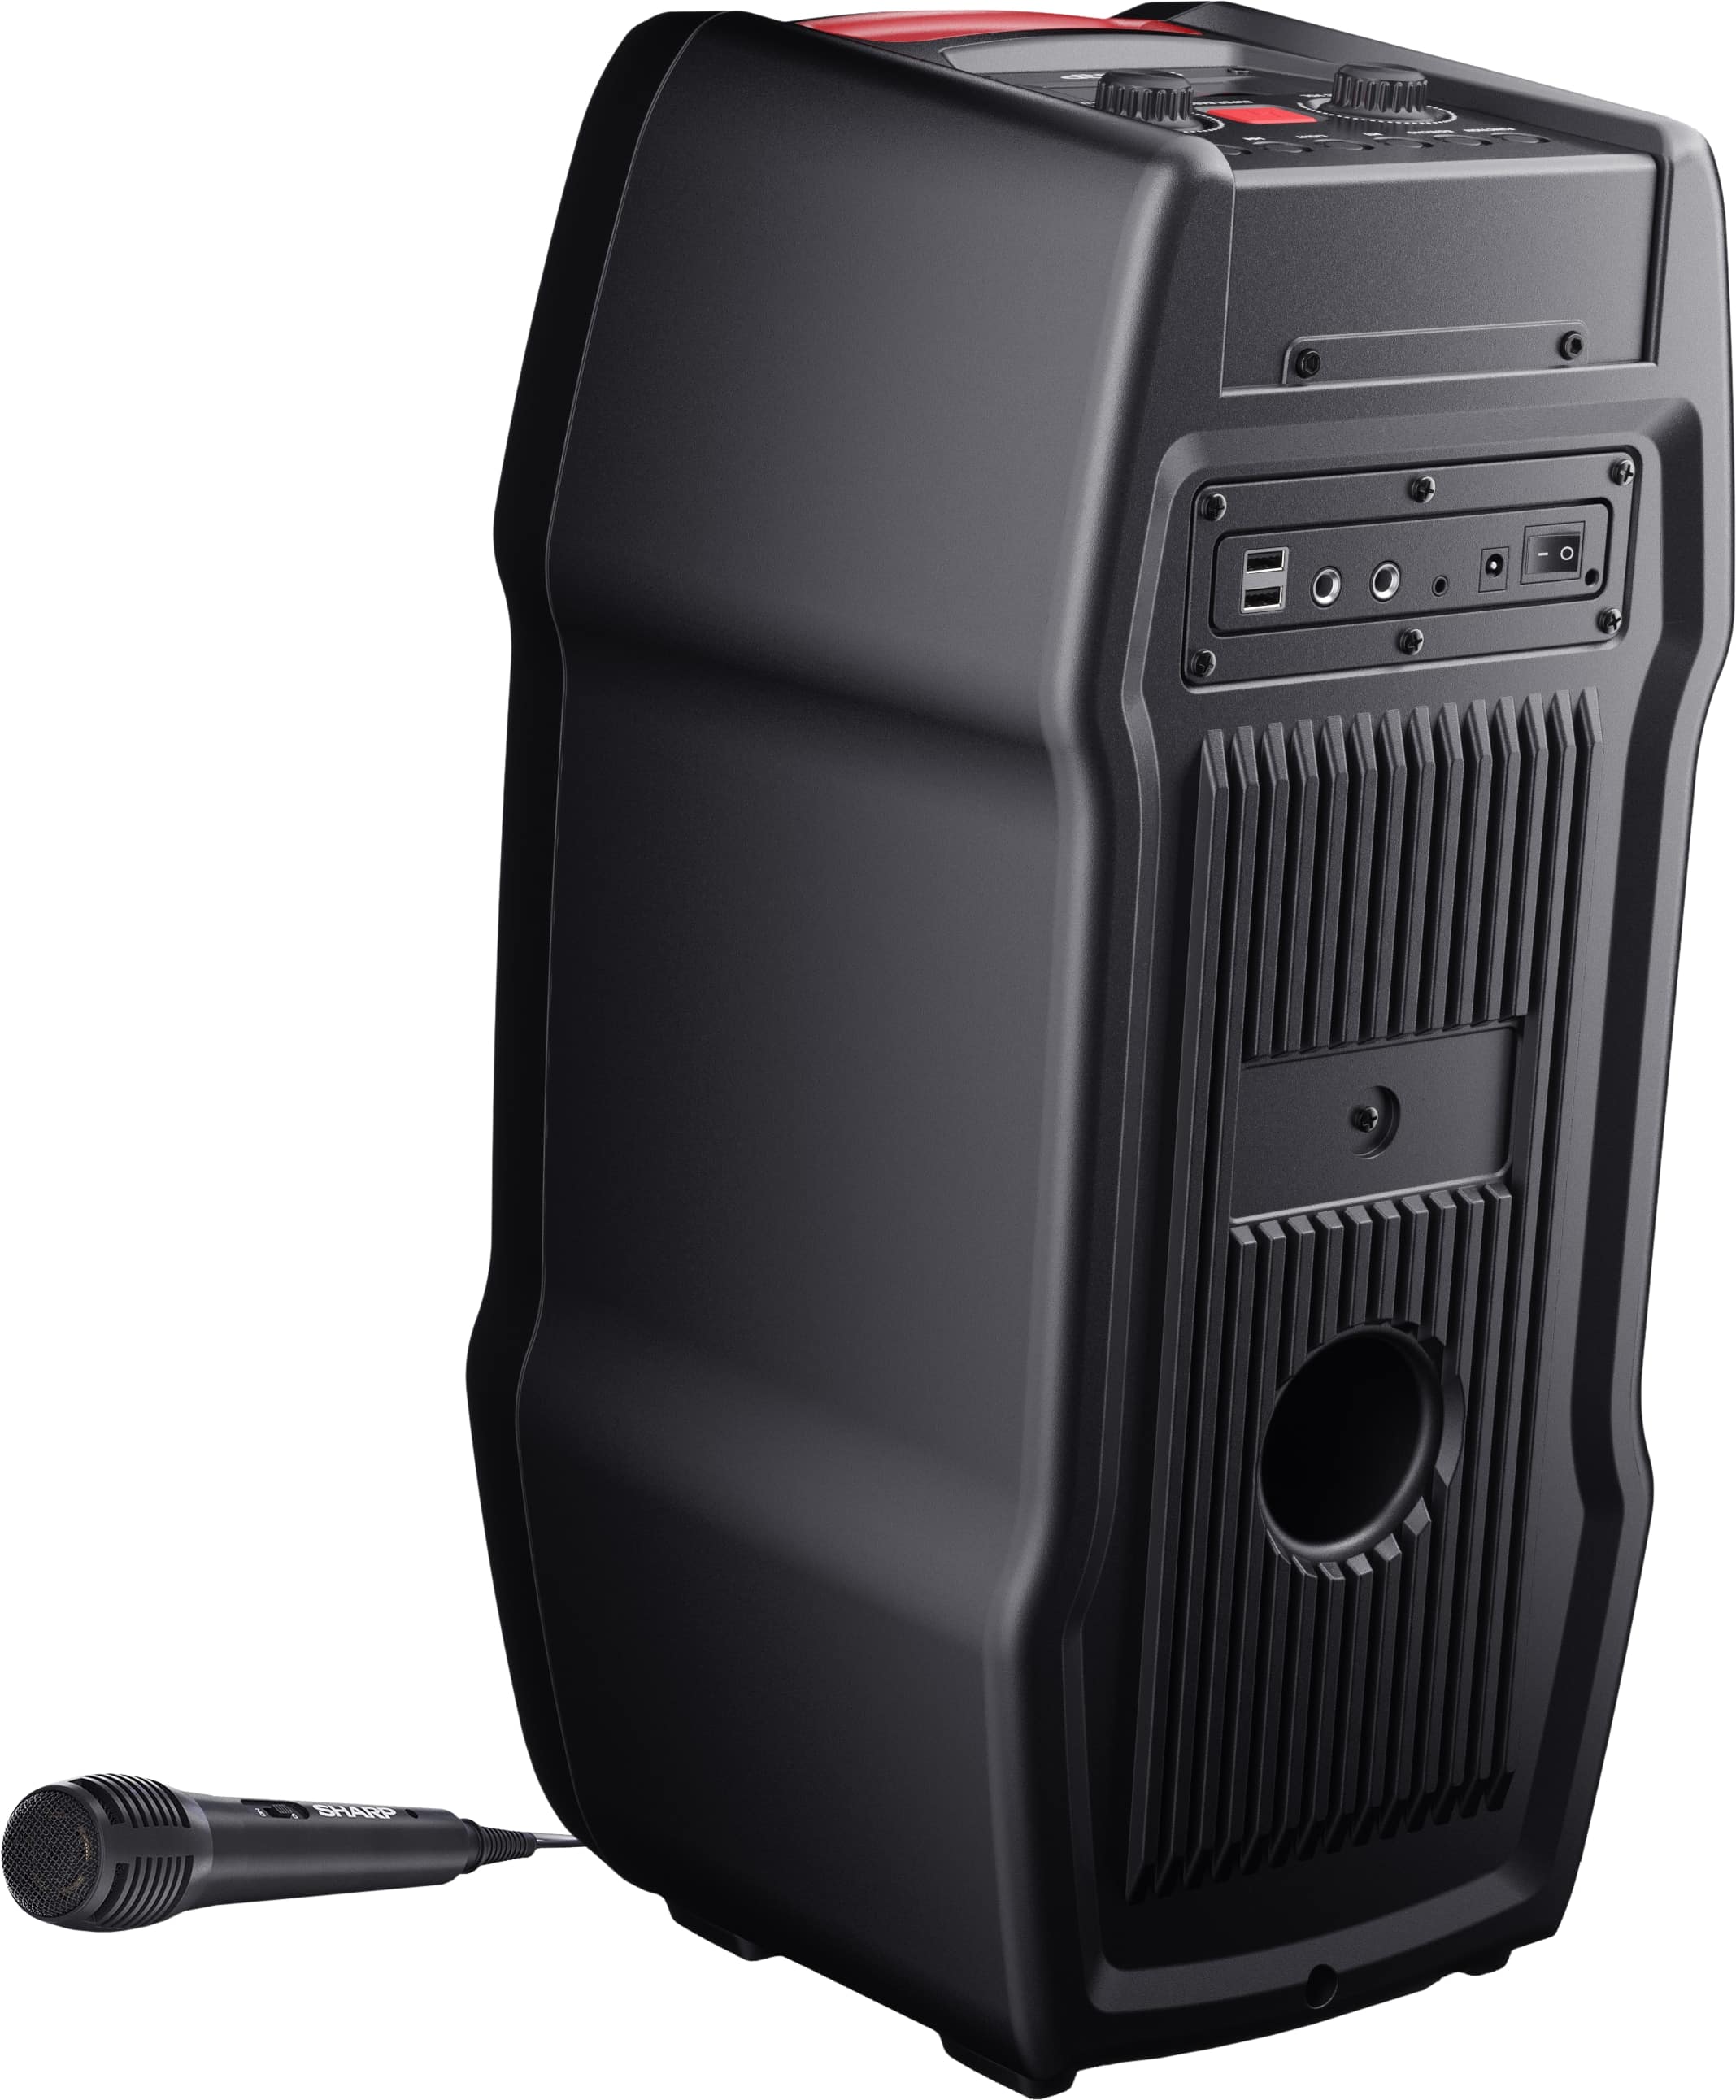 SHARP Party-Lautsprecher PS-929, tragbar, Bluetooth, USB, MP3, 180 W